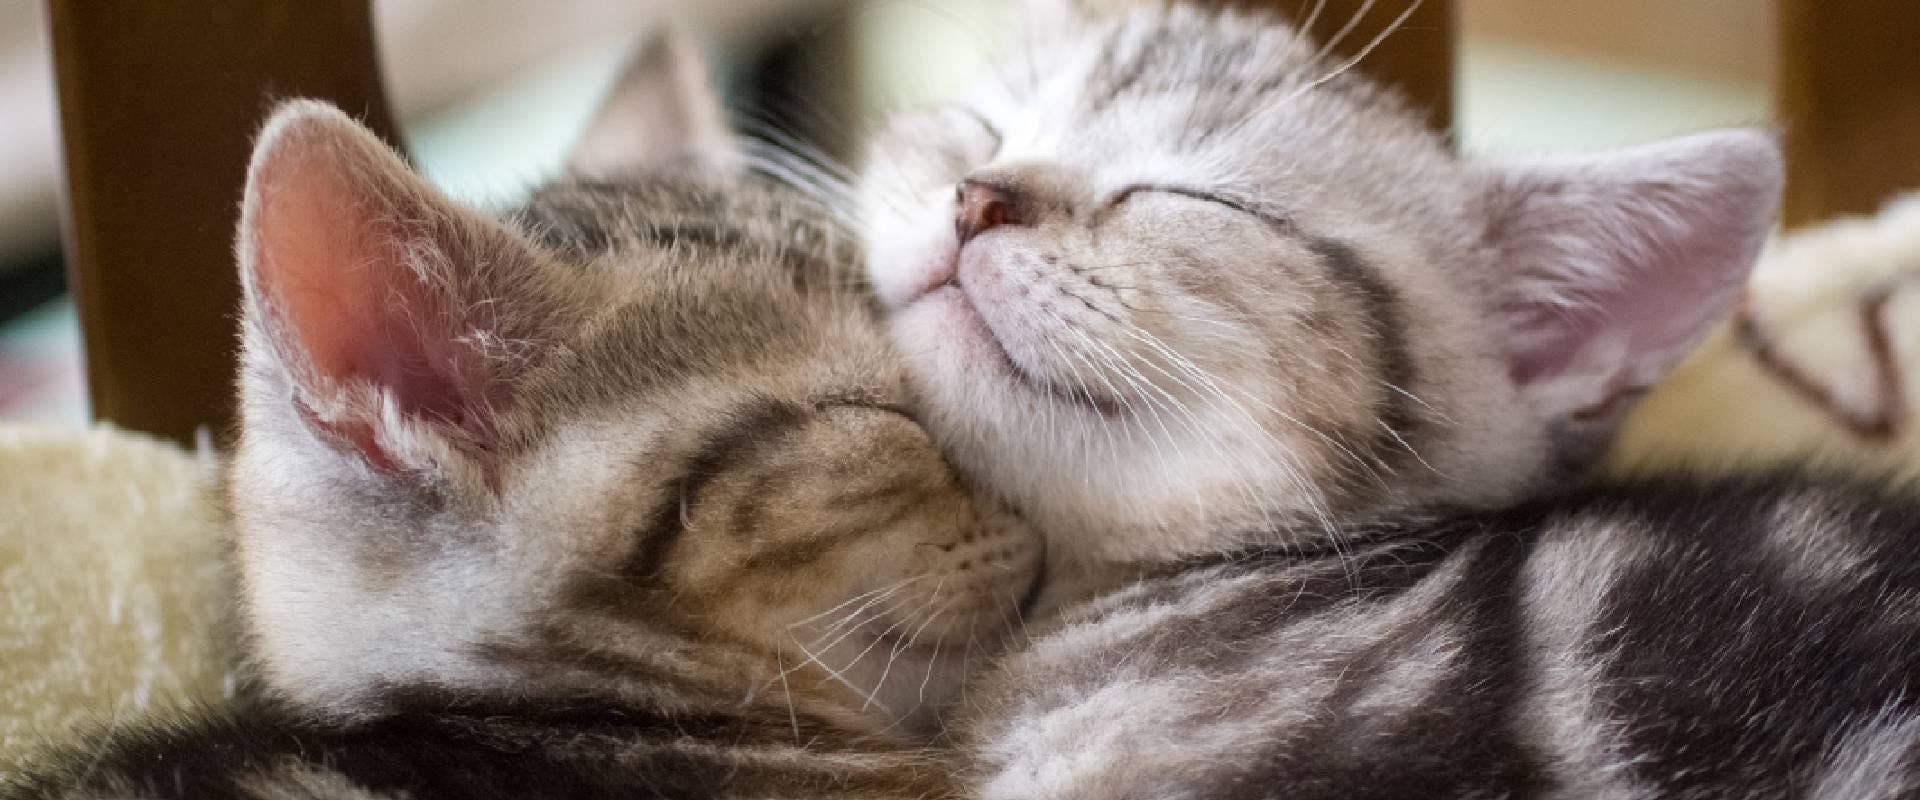 Two grey kittens cuddling